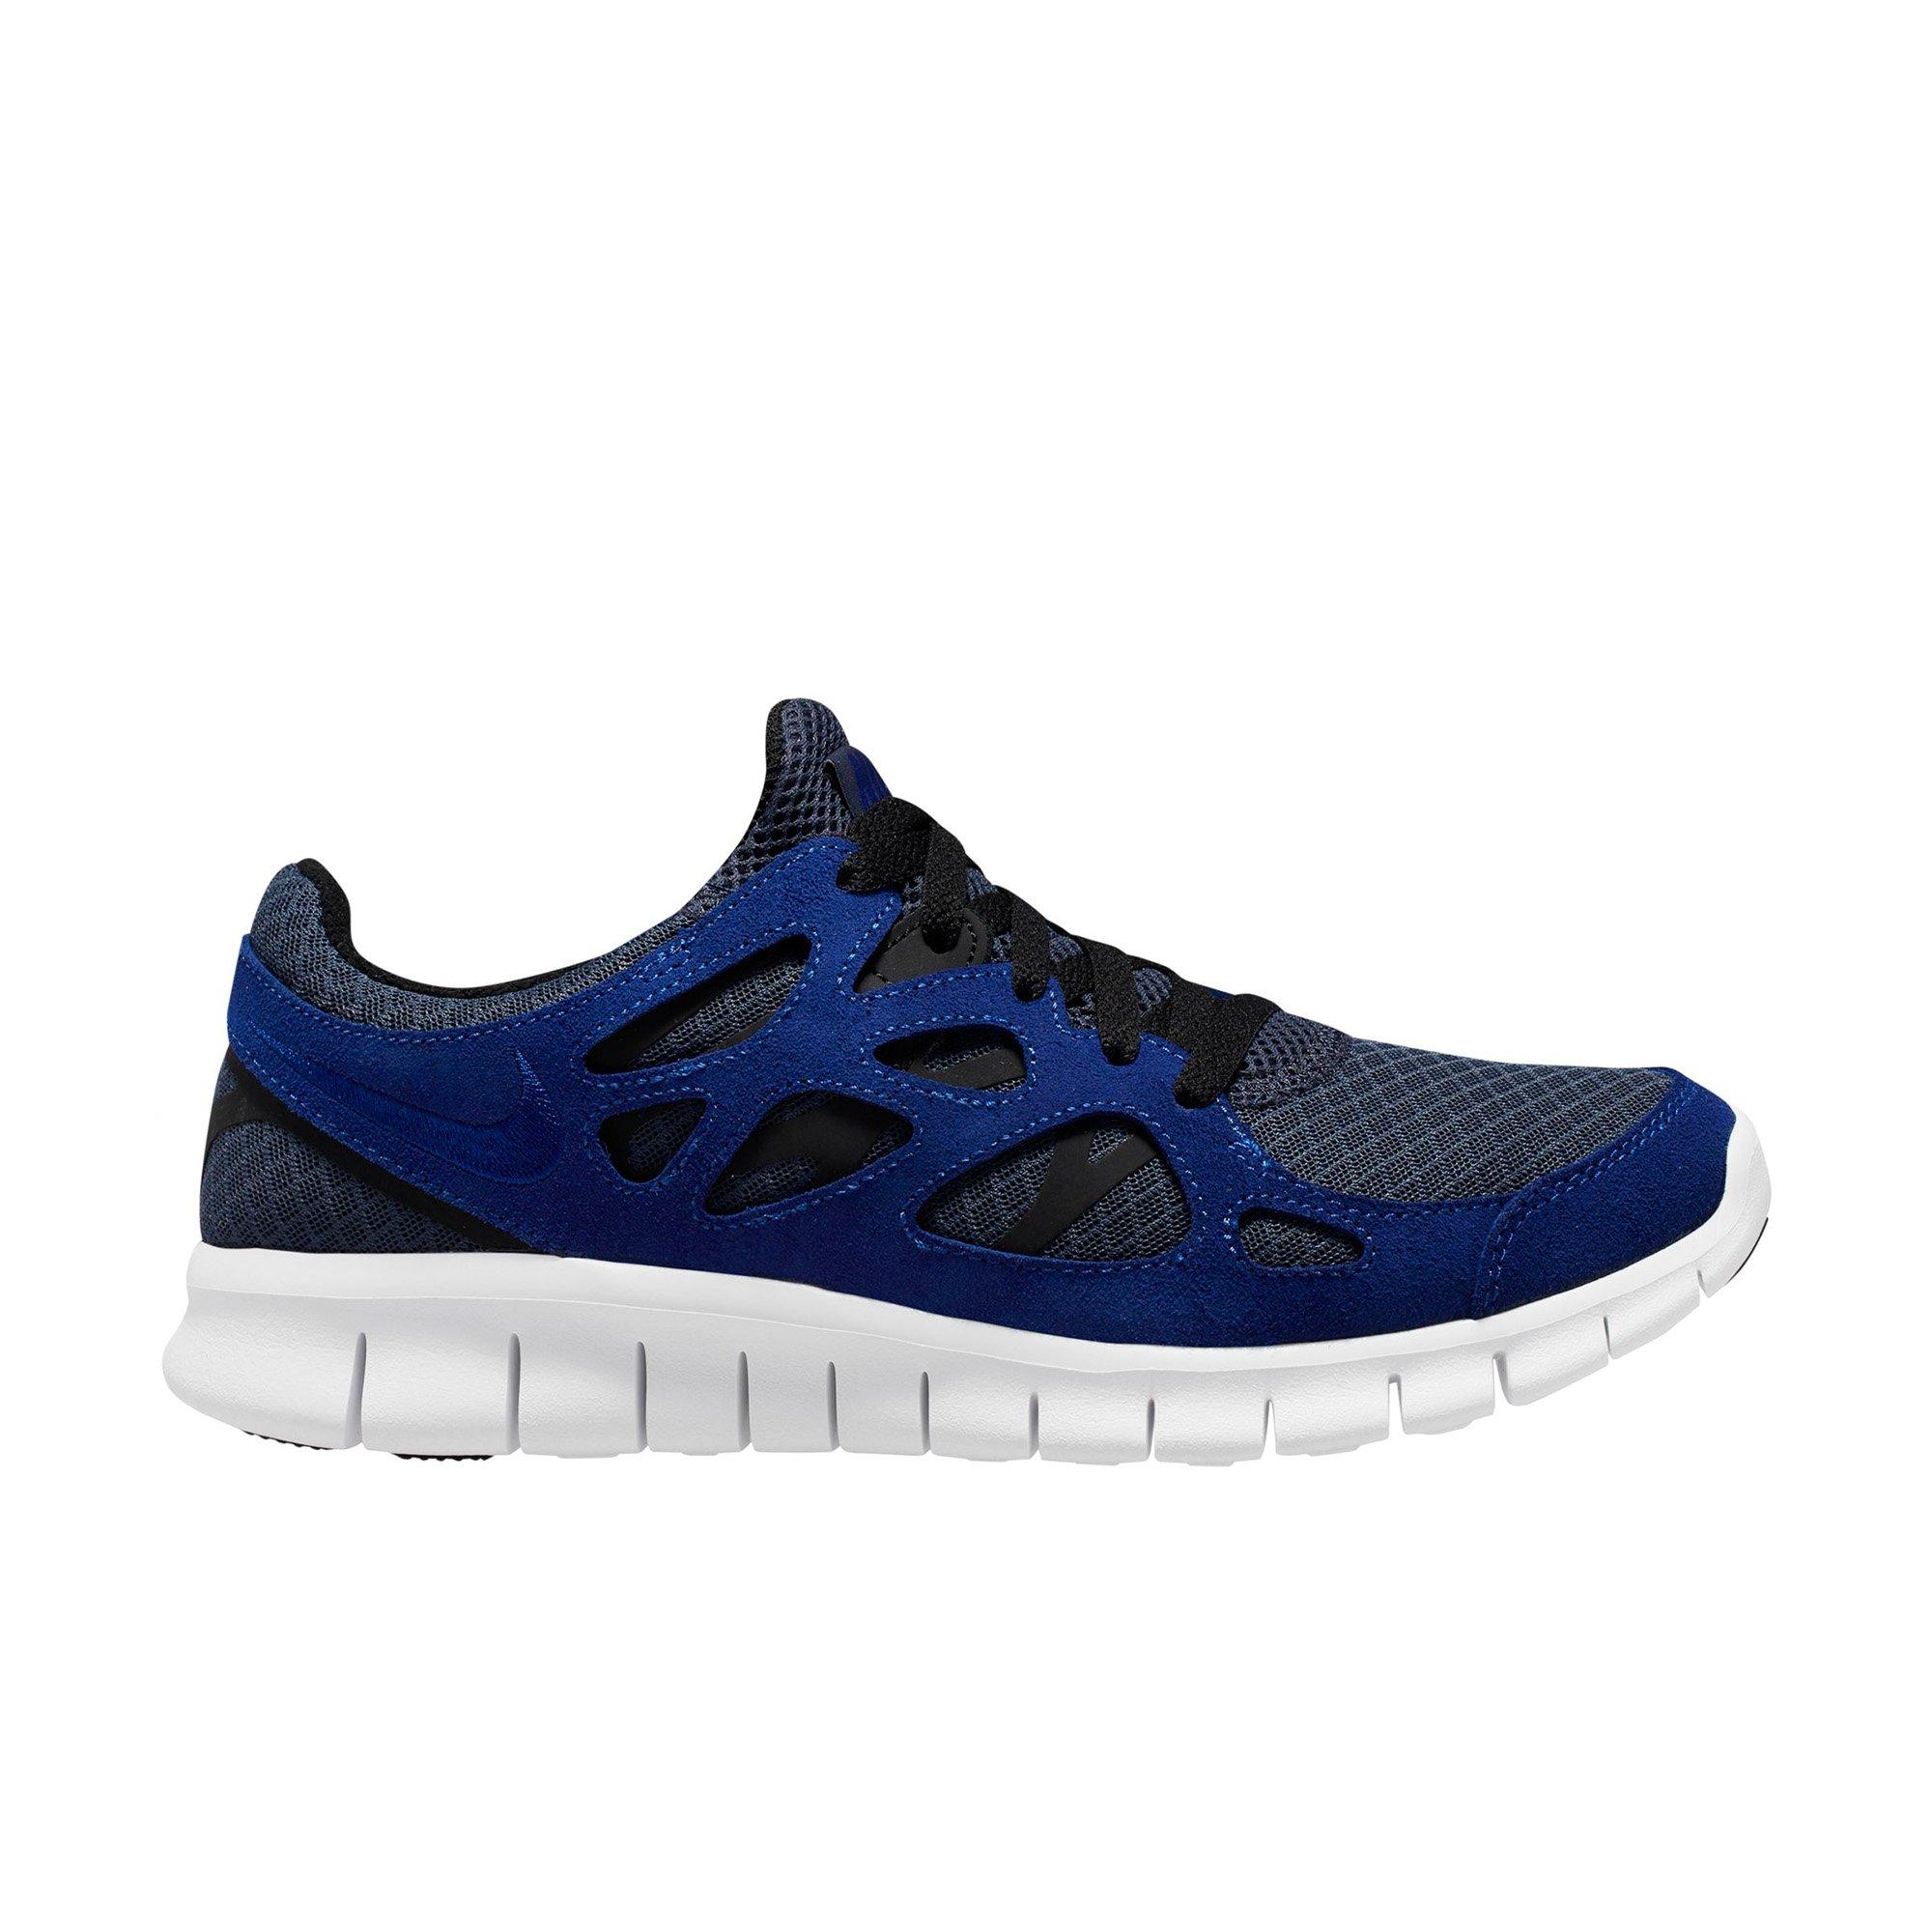 Nike Free Run 2 "Thunder Blue/Deep Royal Blue/Black/White" Shoe